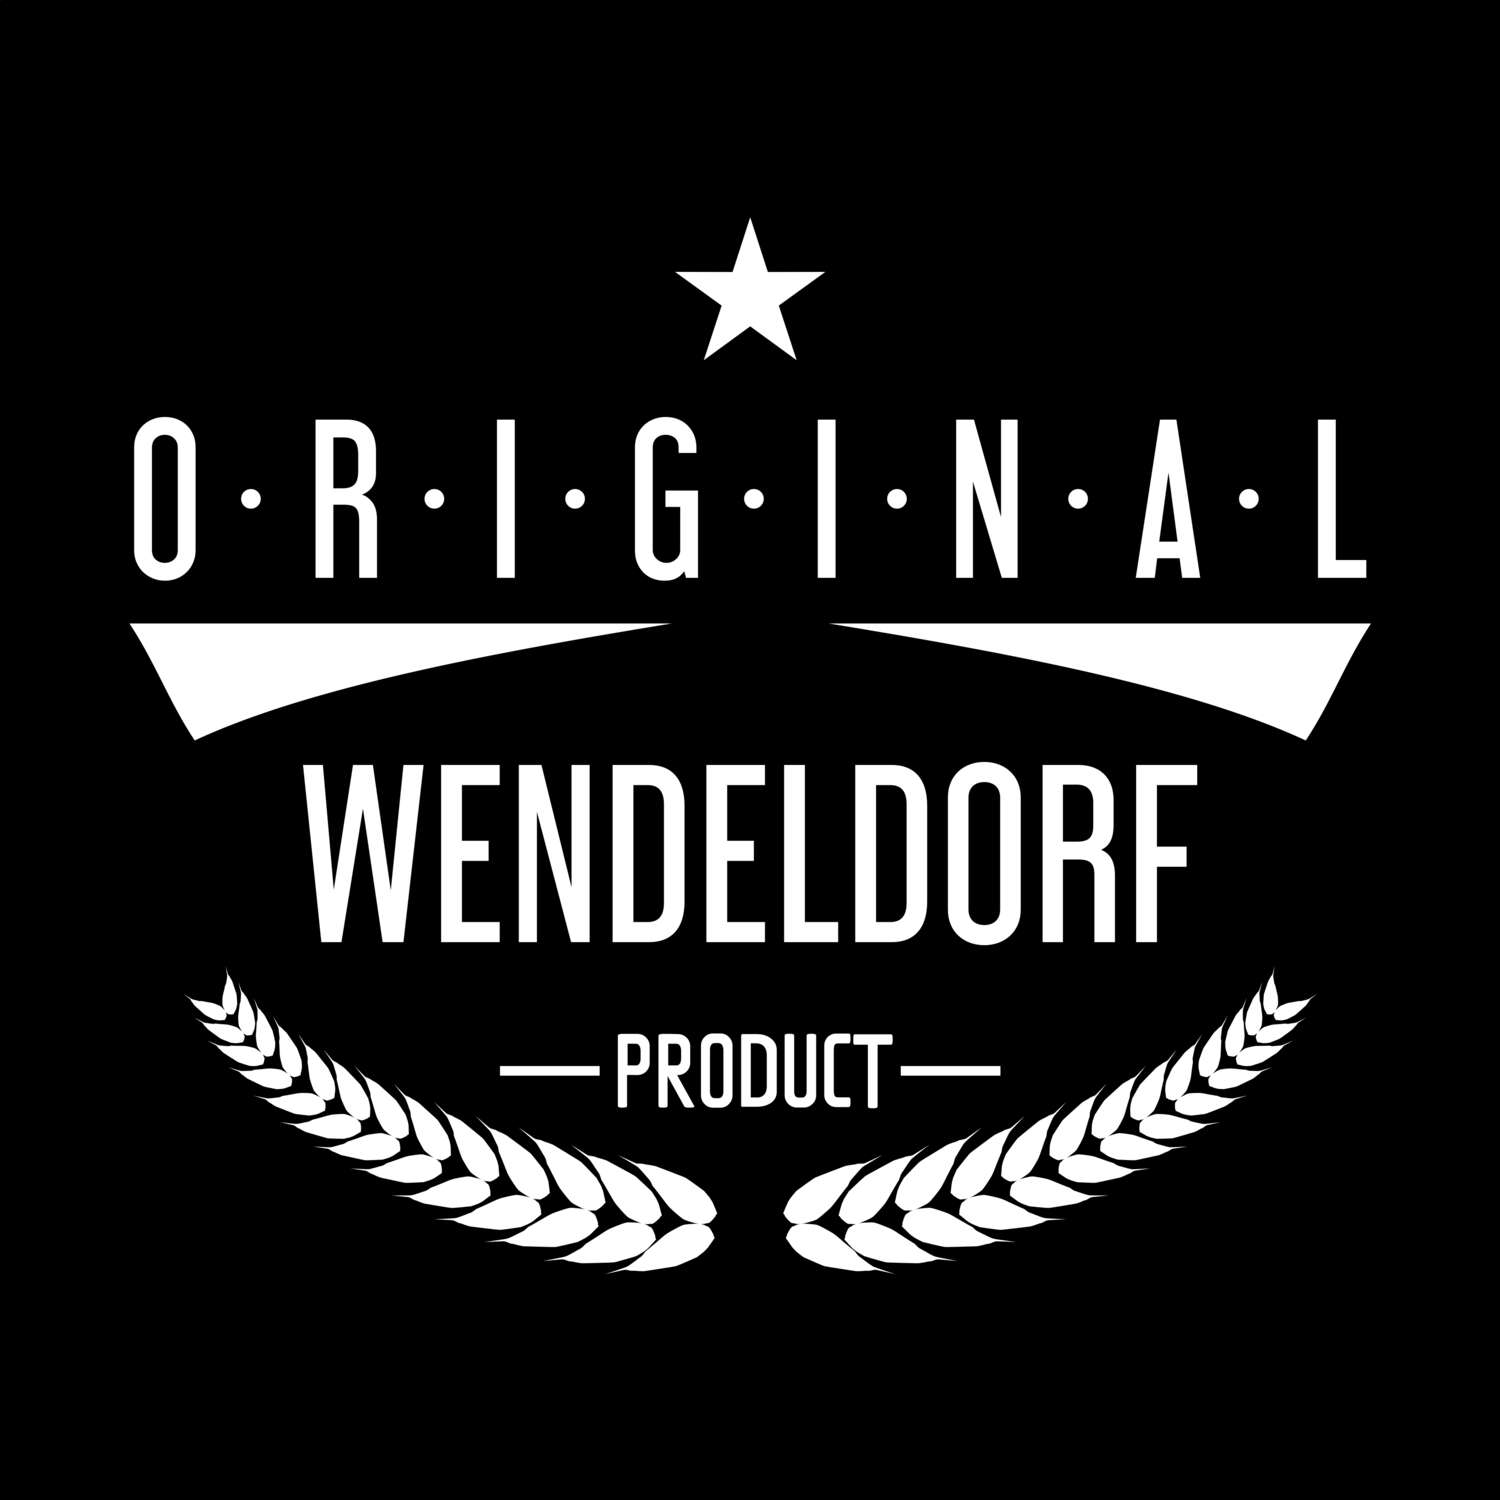 Wendeldorf T-Shirt »Original Product«